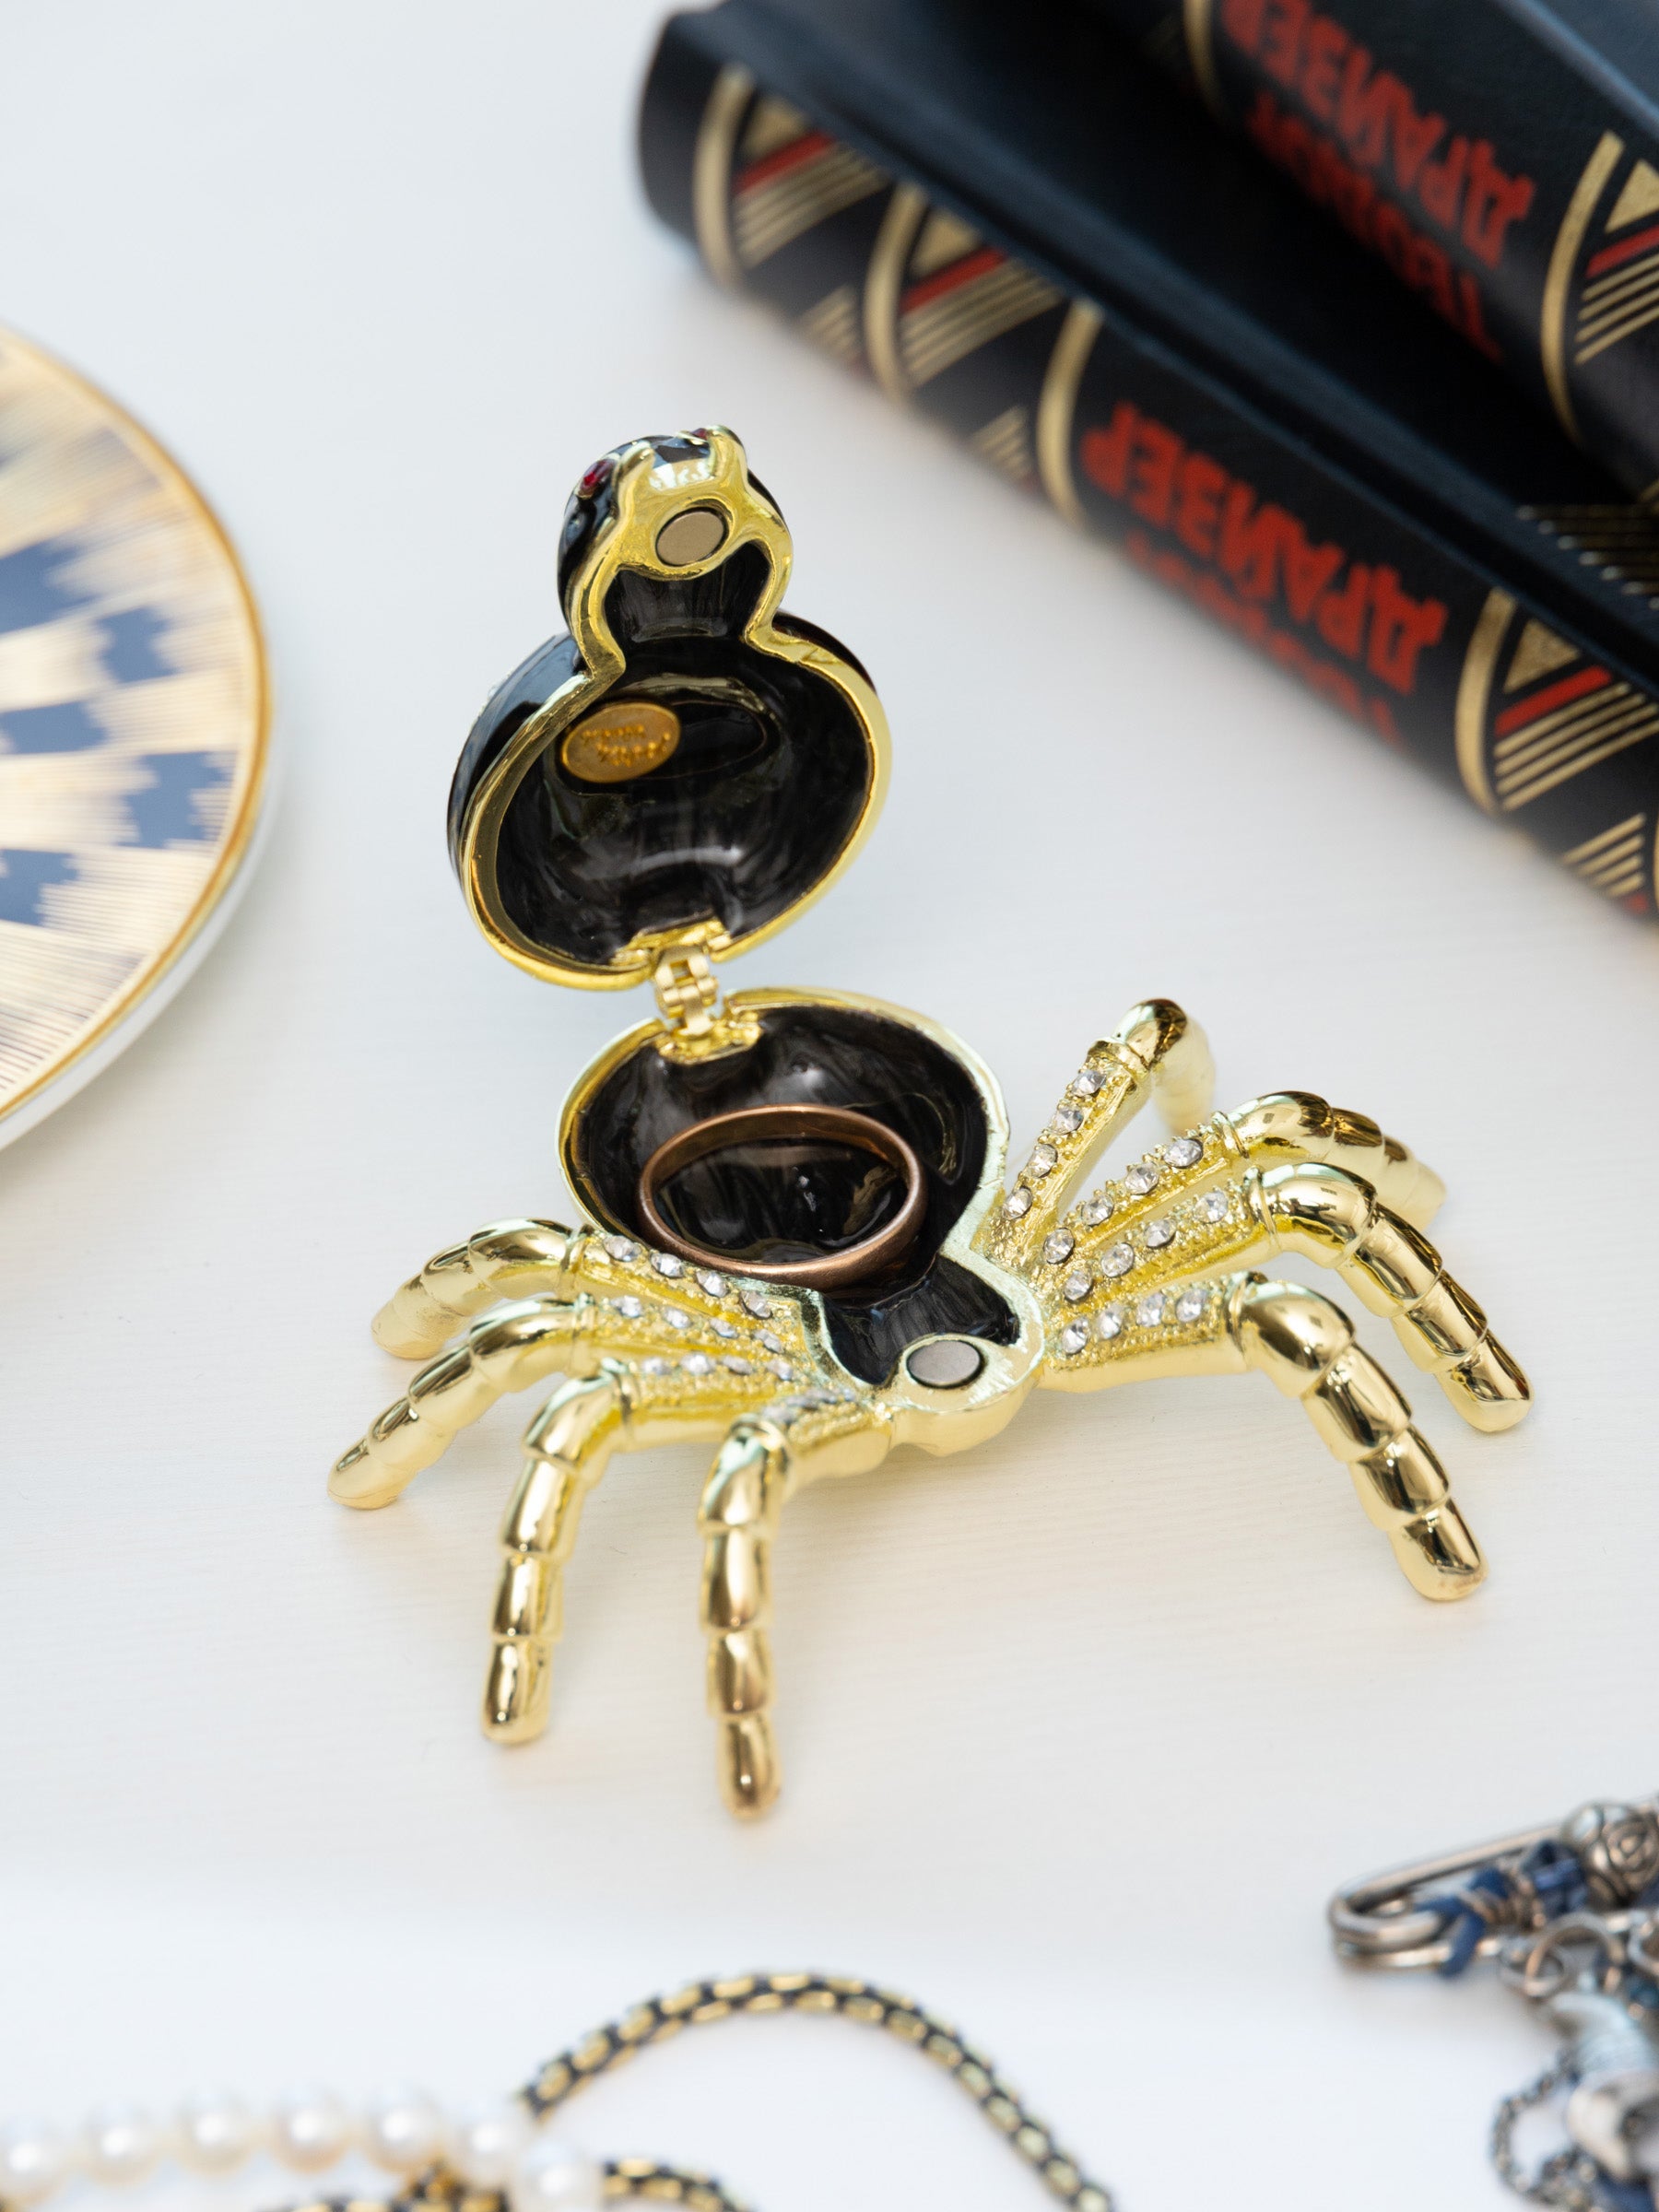 Gold & Black Tarantula Spider